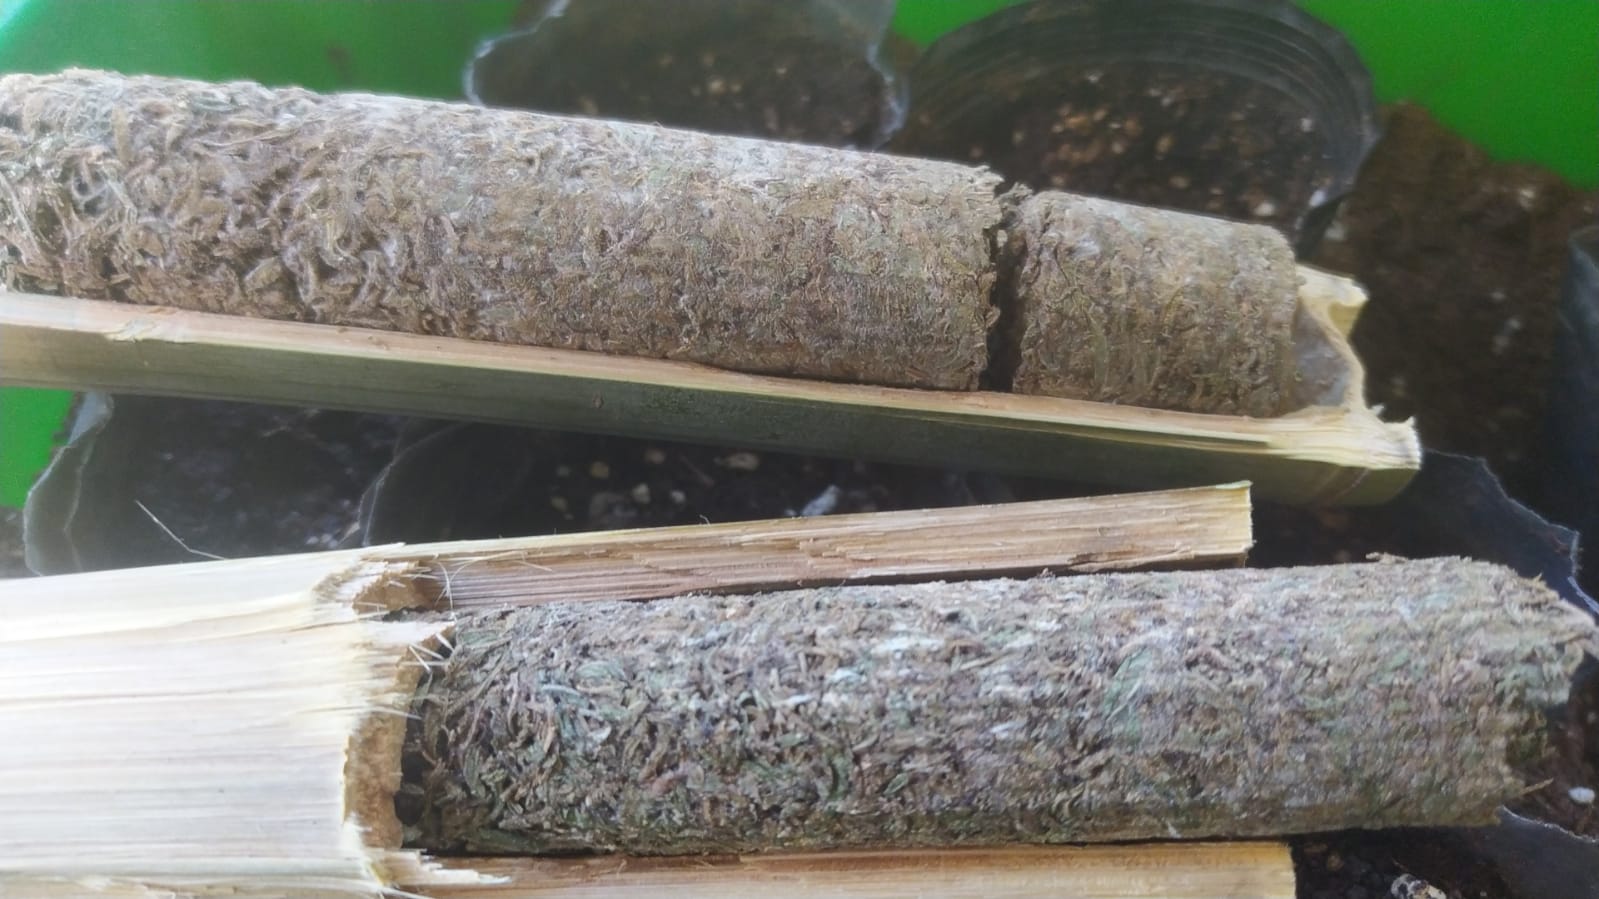 Thai haze Bamboo cure front dry back moist (1).jpeg